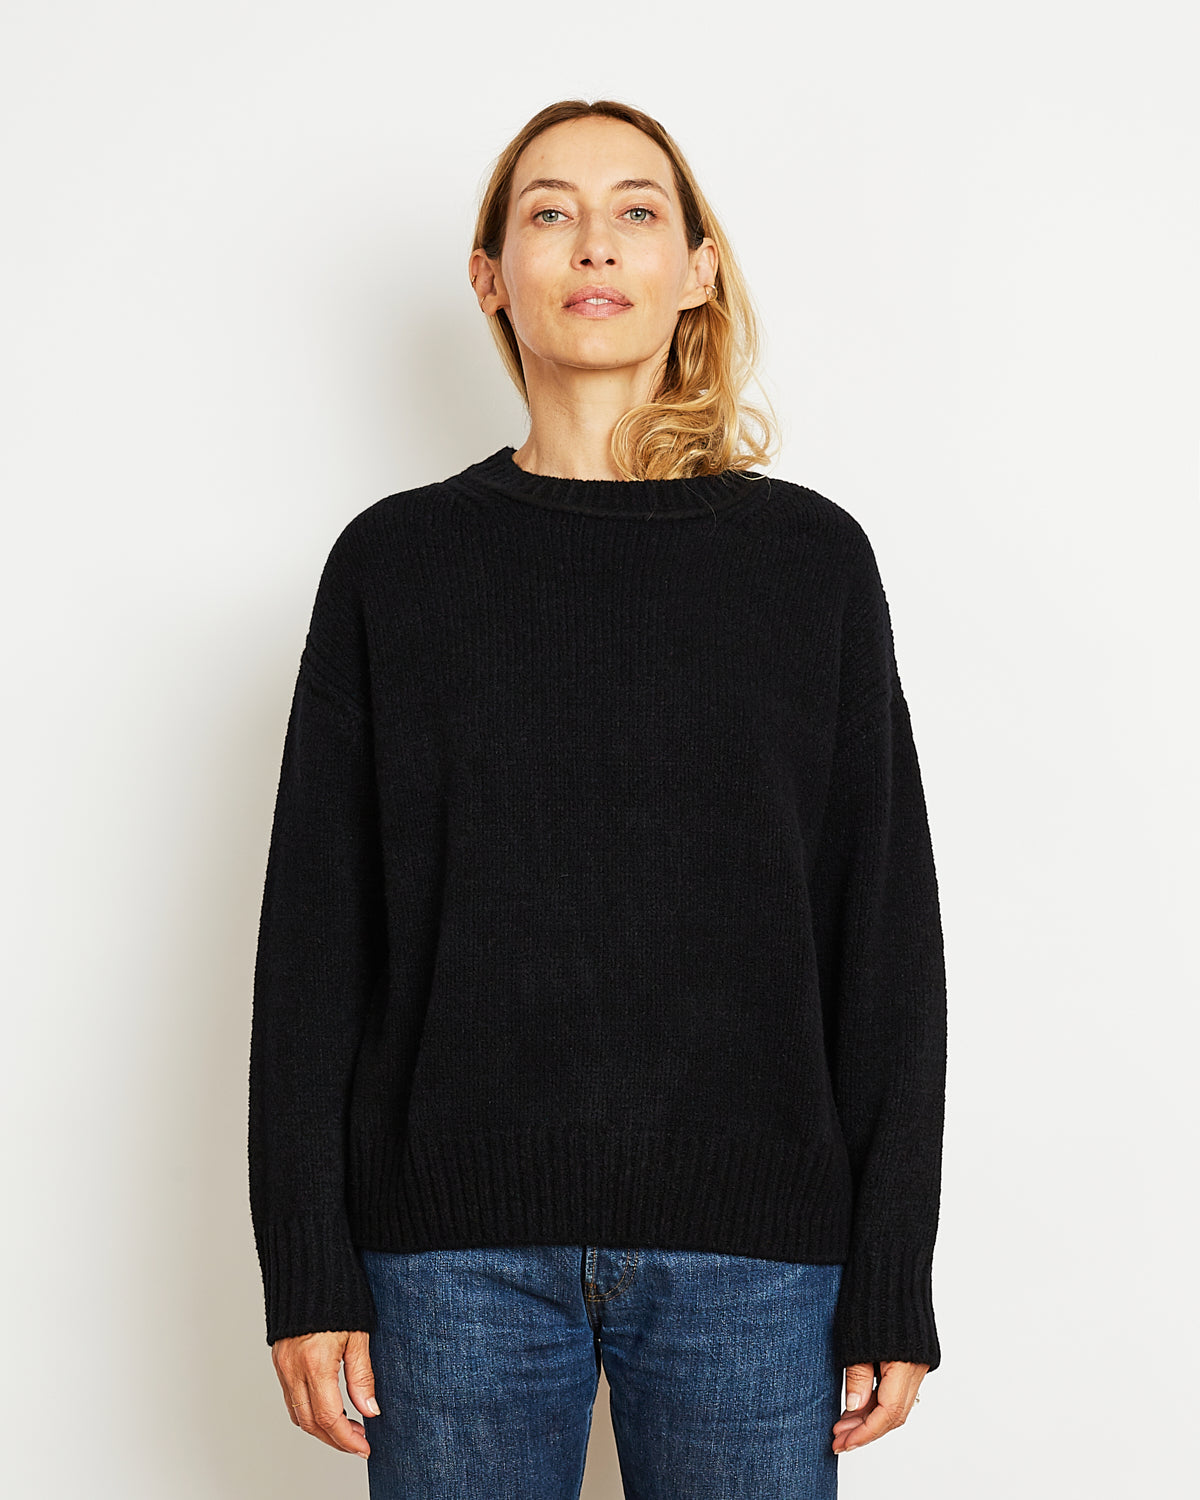 woman oversize sweater Bubble black